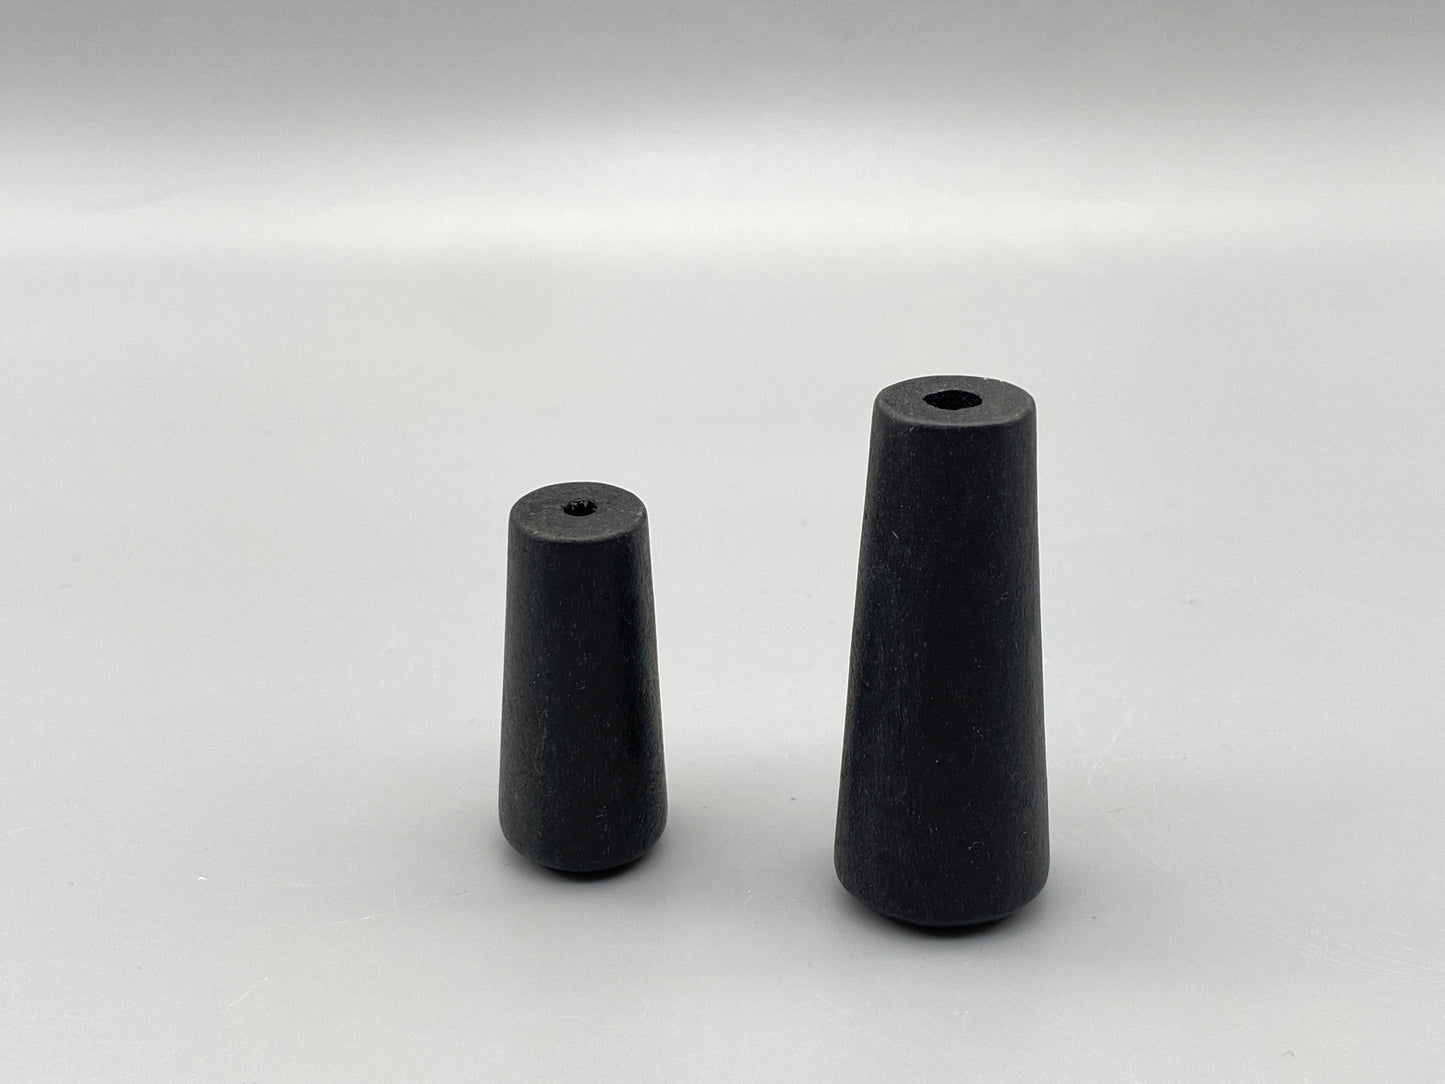 3x Slim Black Wooden Acorns - Cord Pull / Light Pulls - Medium & Large Sizes - Pack of 3